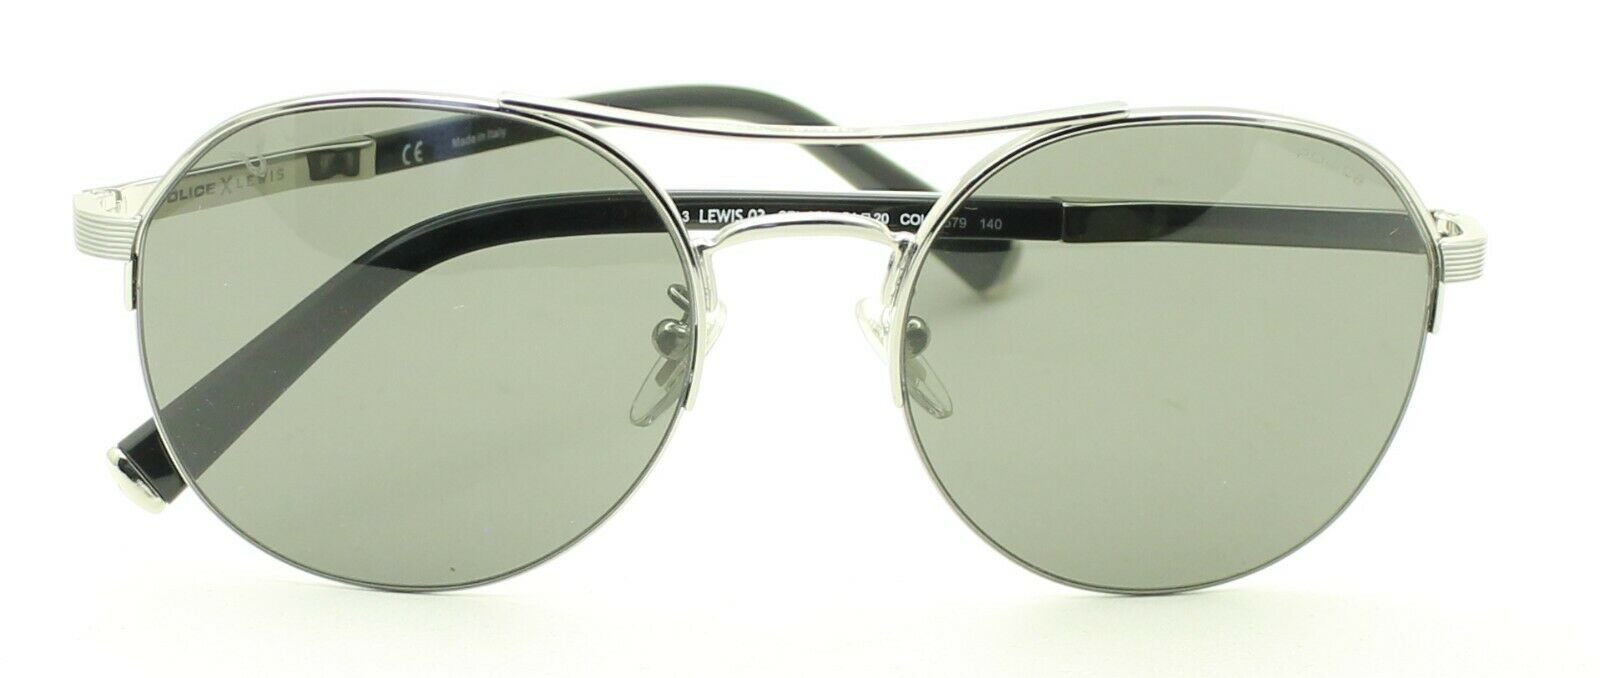 POLICE LEWIS 03 SPLA24 COL. 0579 54mm  Sunglasses Shades Eyewear Frames - New